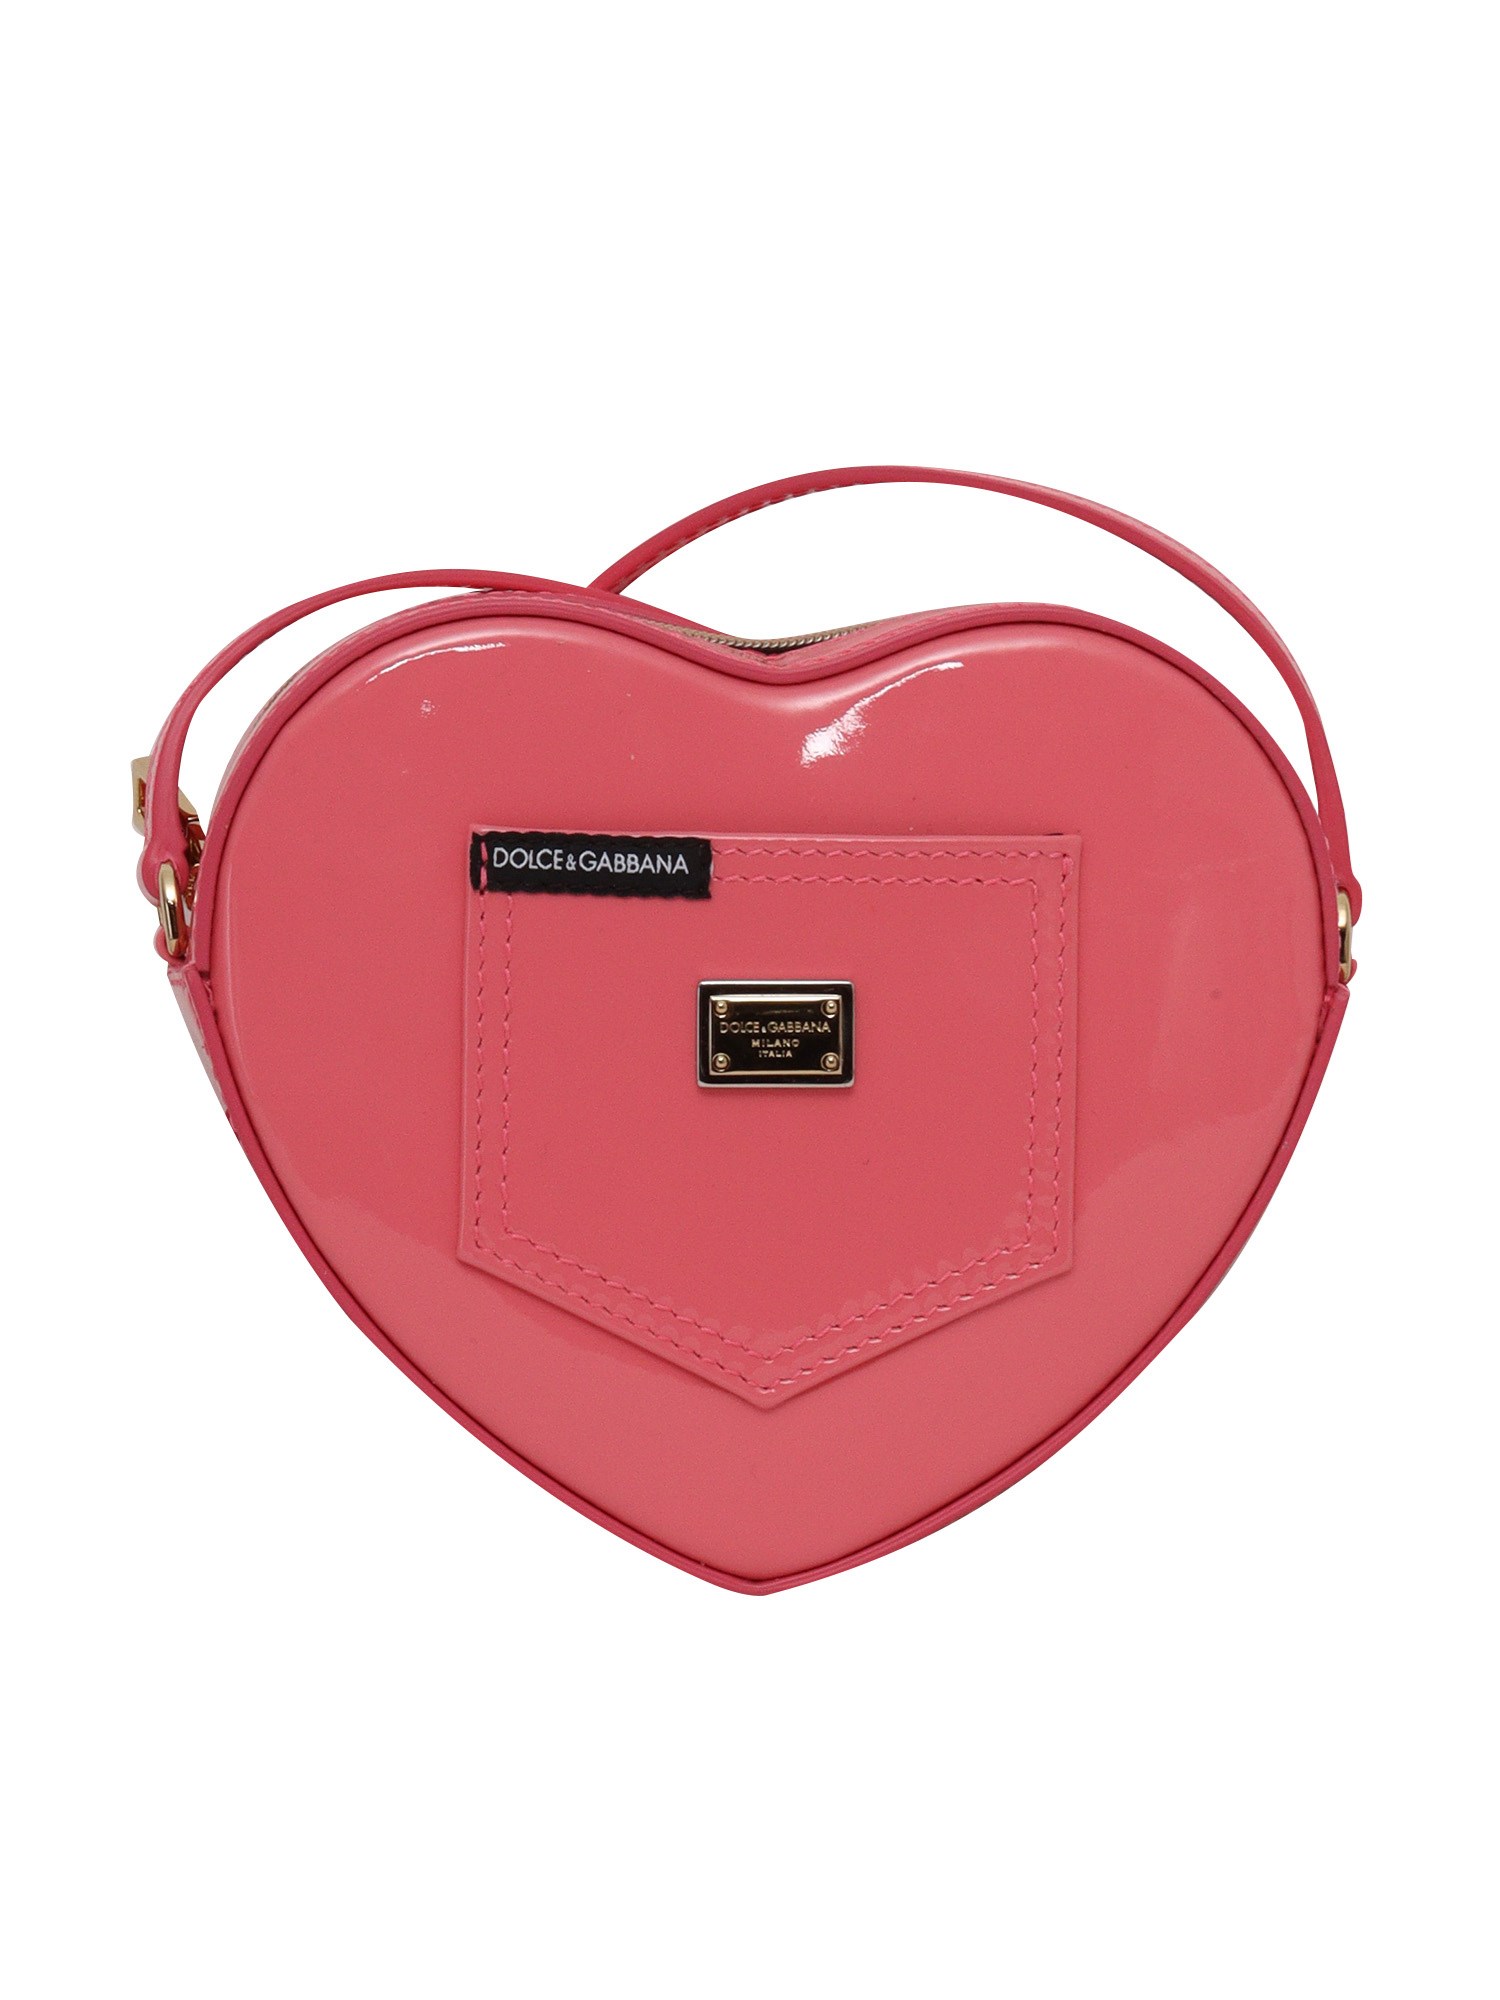 Dolce & Gabbana Junior Heart Shaped Bag In Pink